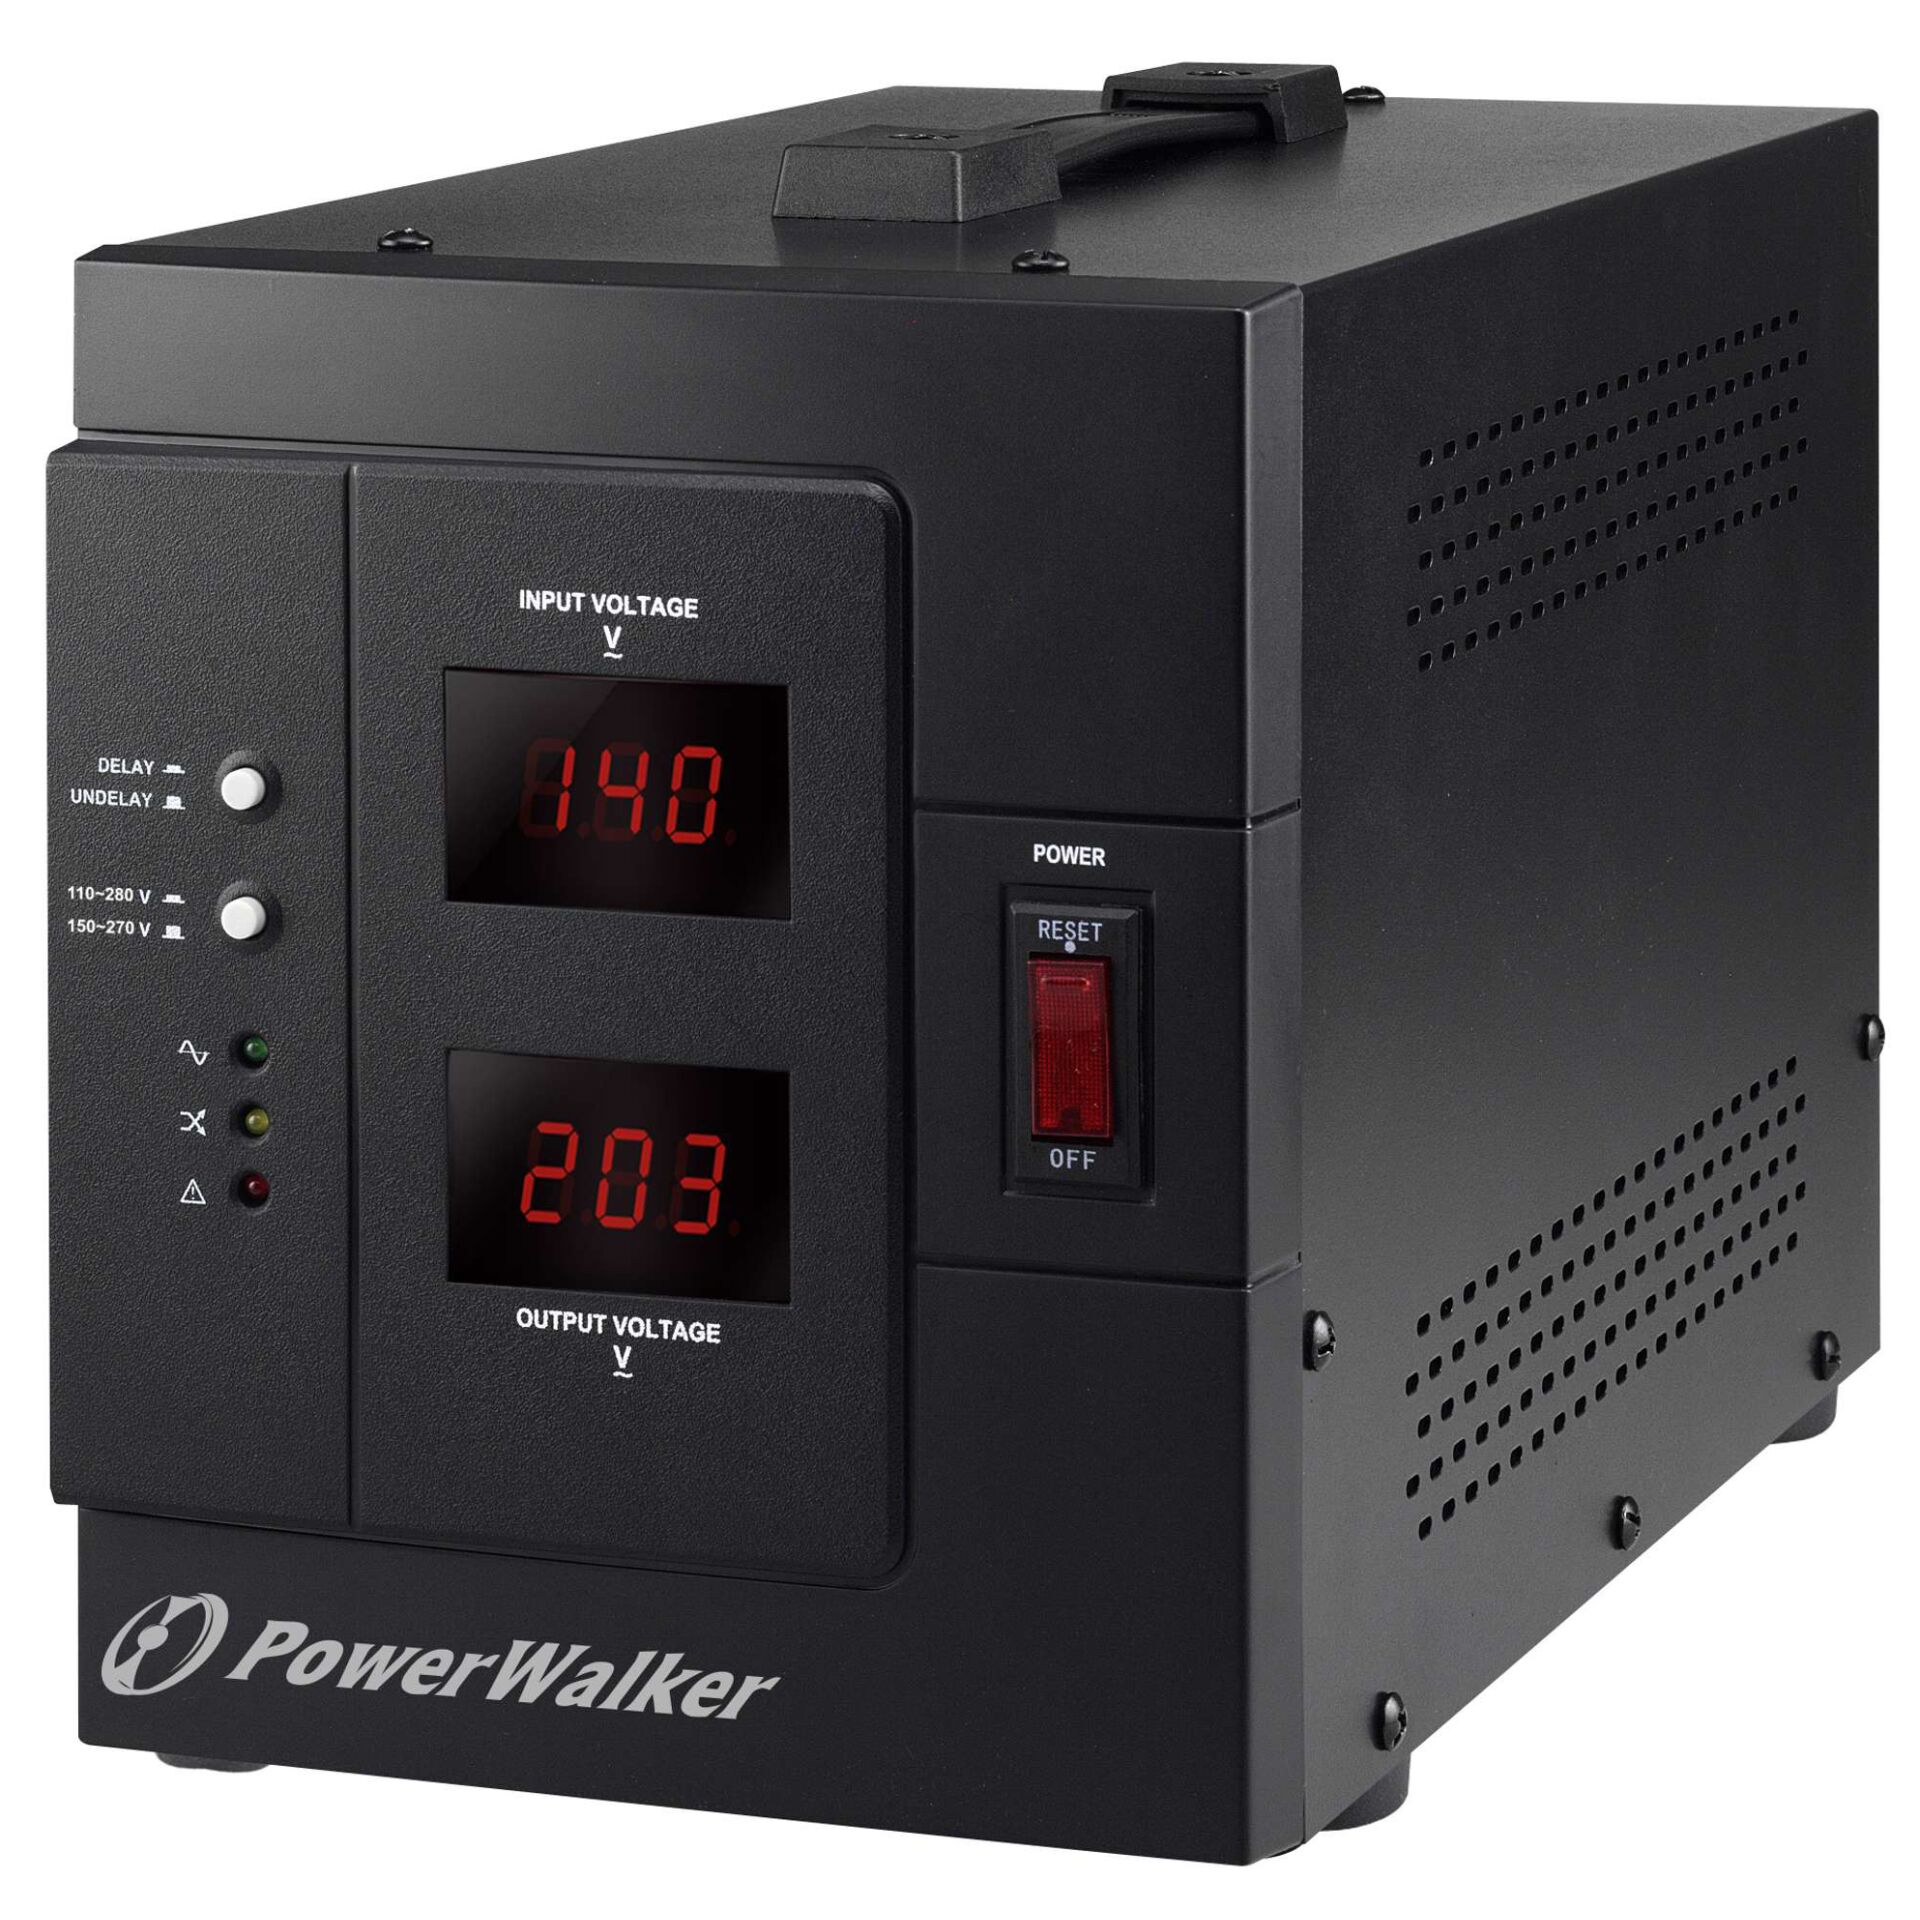 BlueWalker PowerWalker AVR 3000 SIV, FR, 1-fach